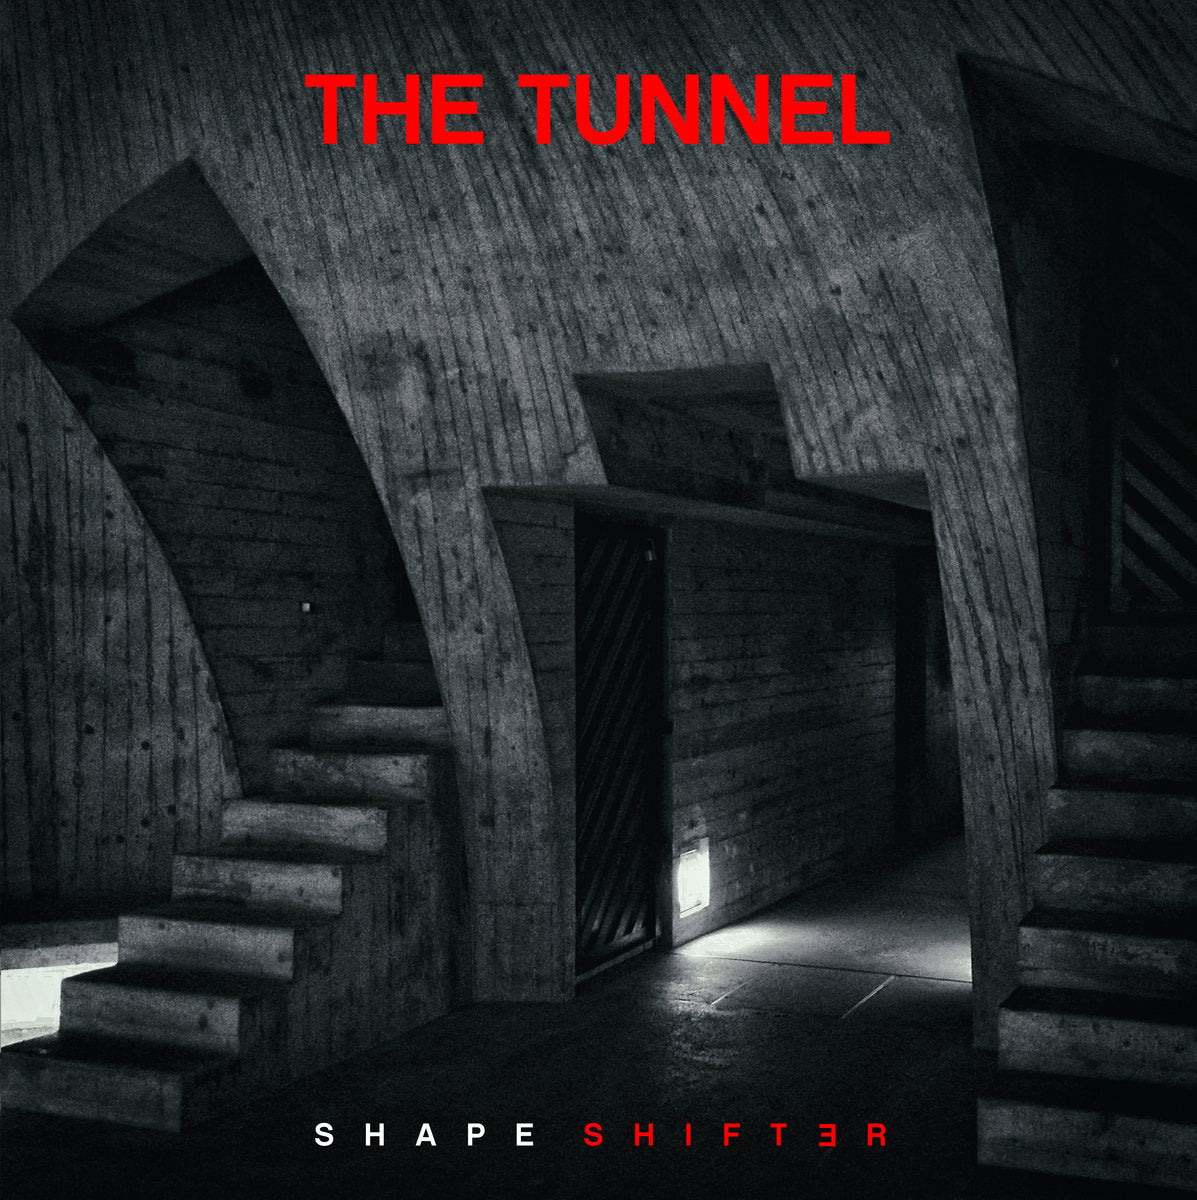 THE TUNNEL - "SHAPESHIFTER" Vinyl LP